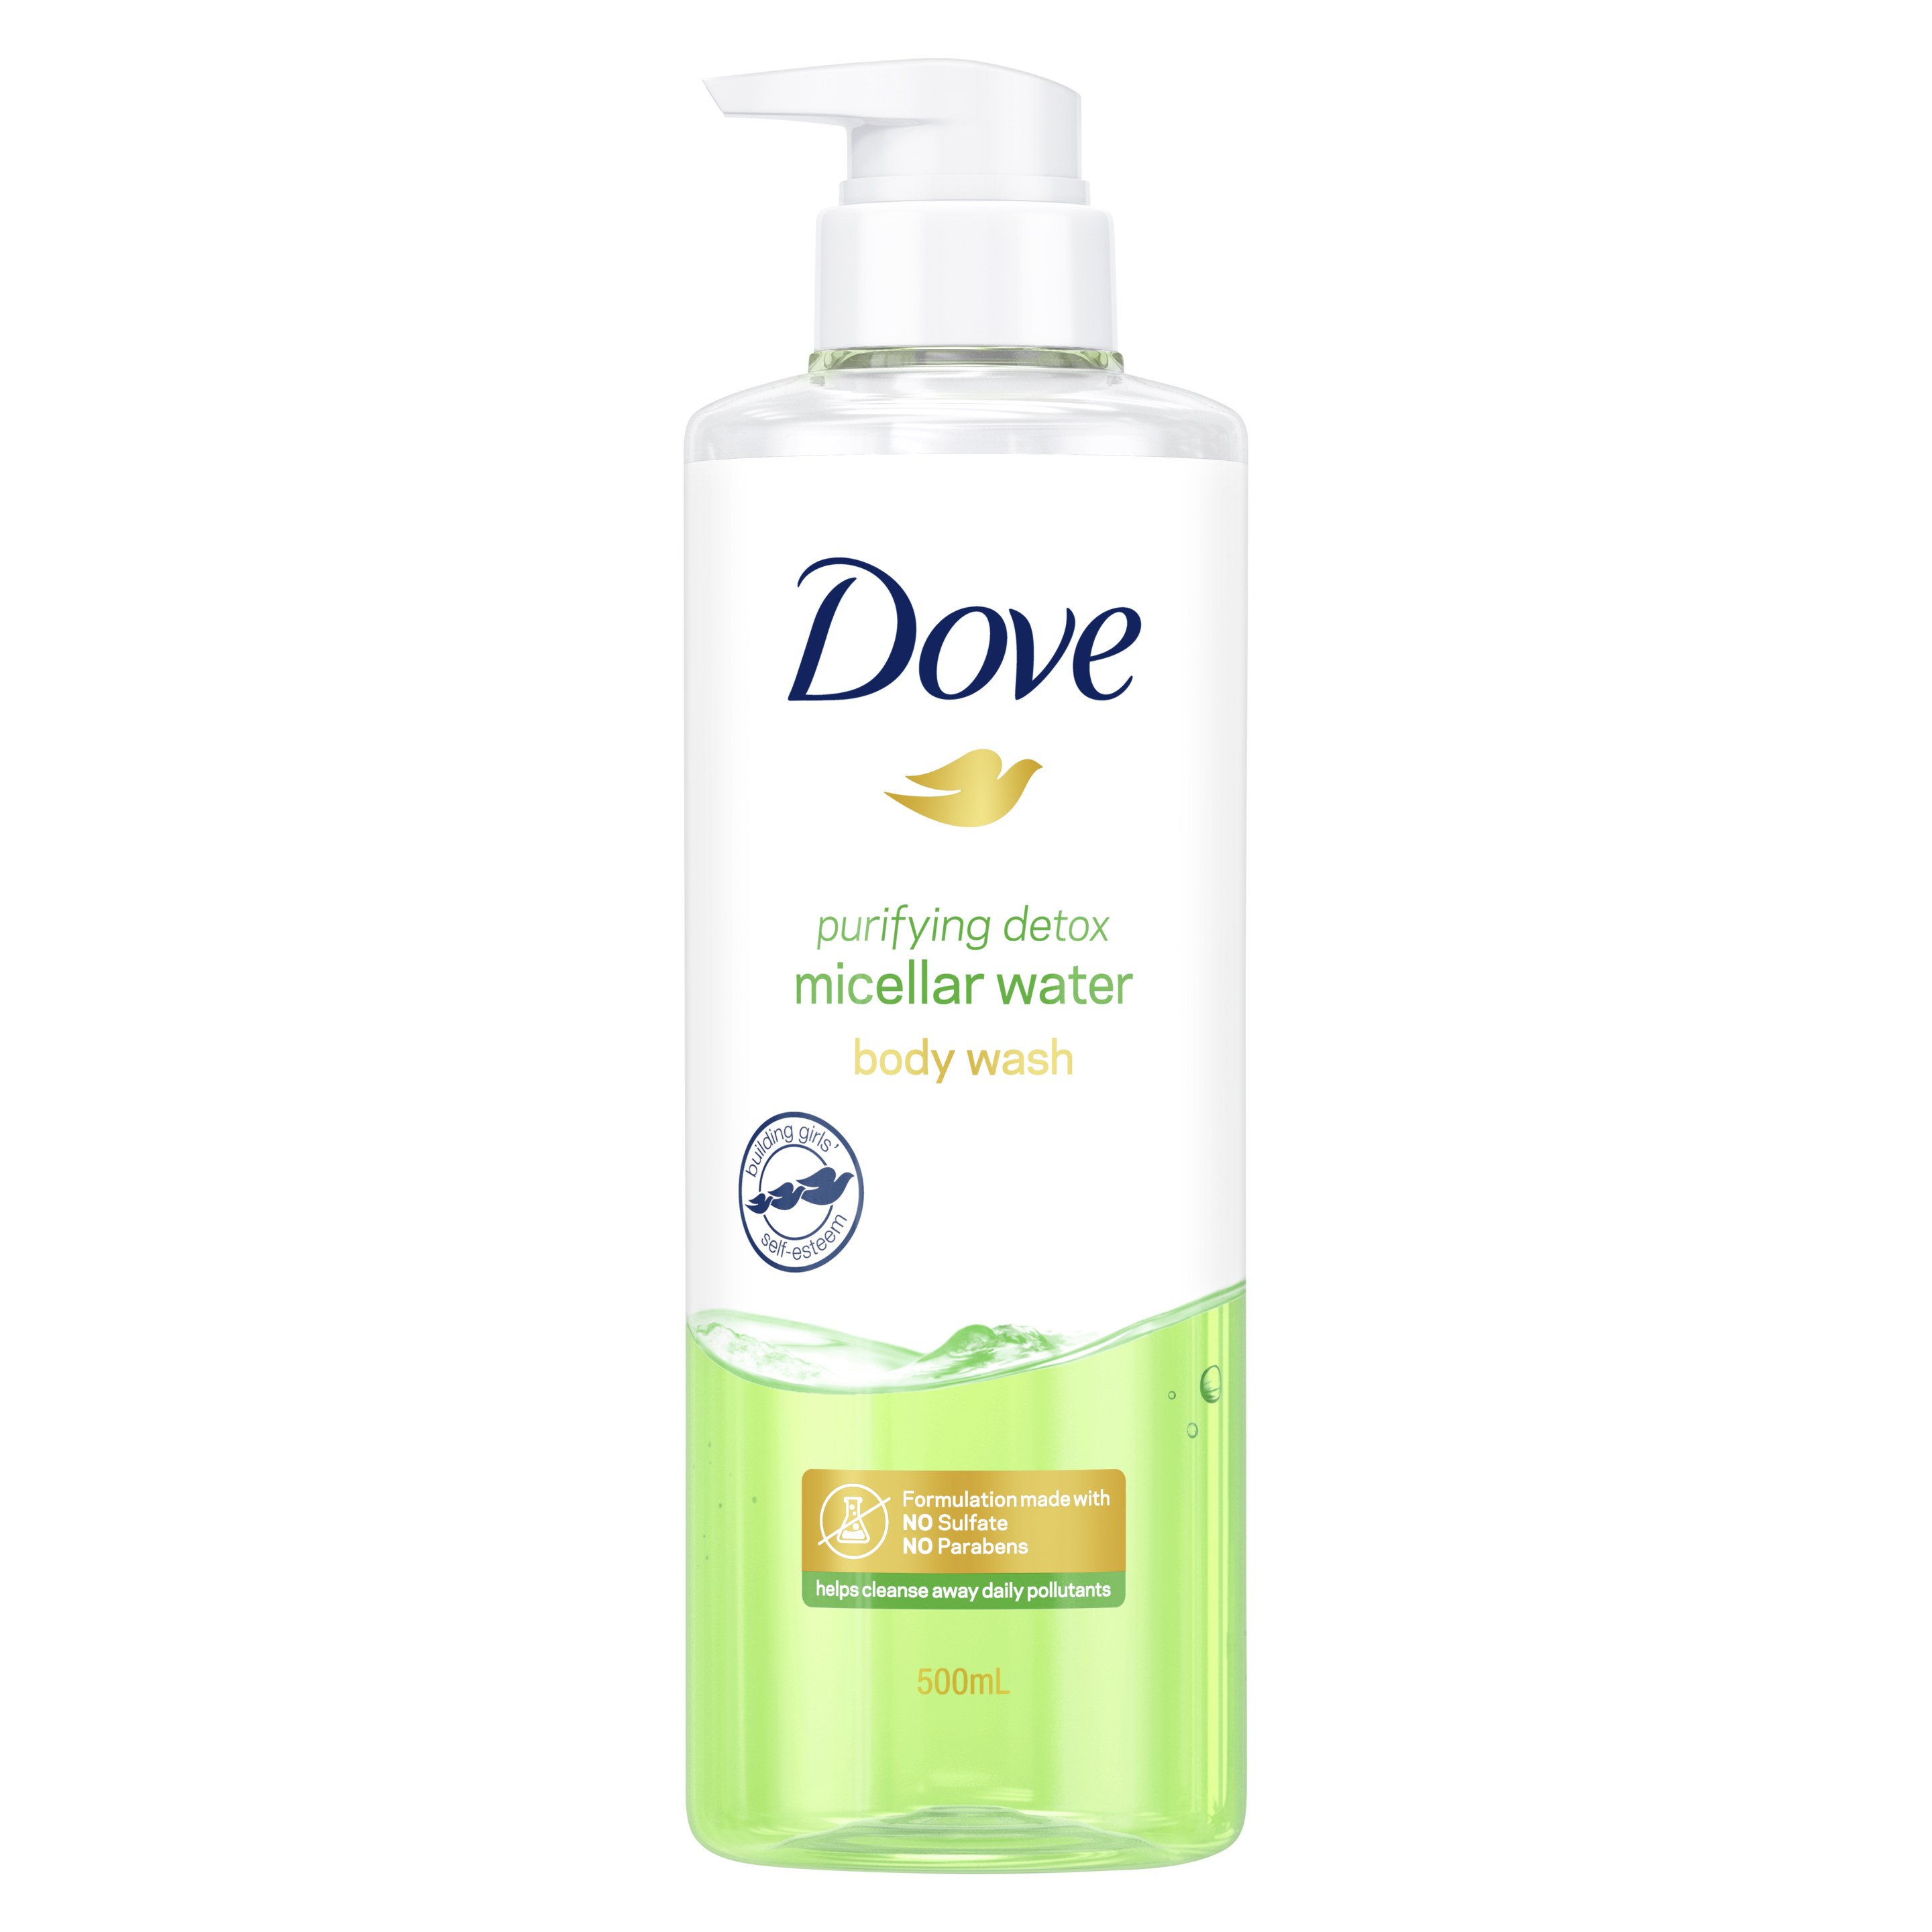 Dove Micellar Water Purifying Detox Body Wash 500ml